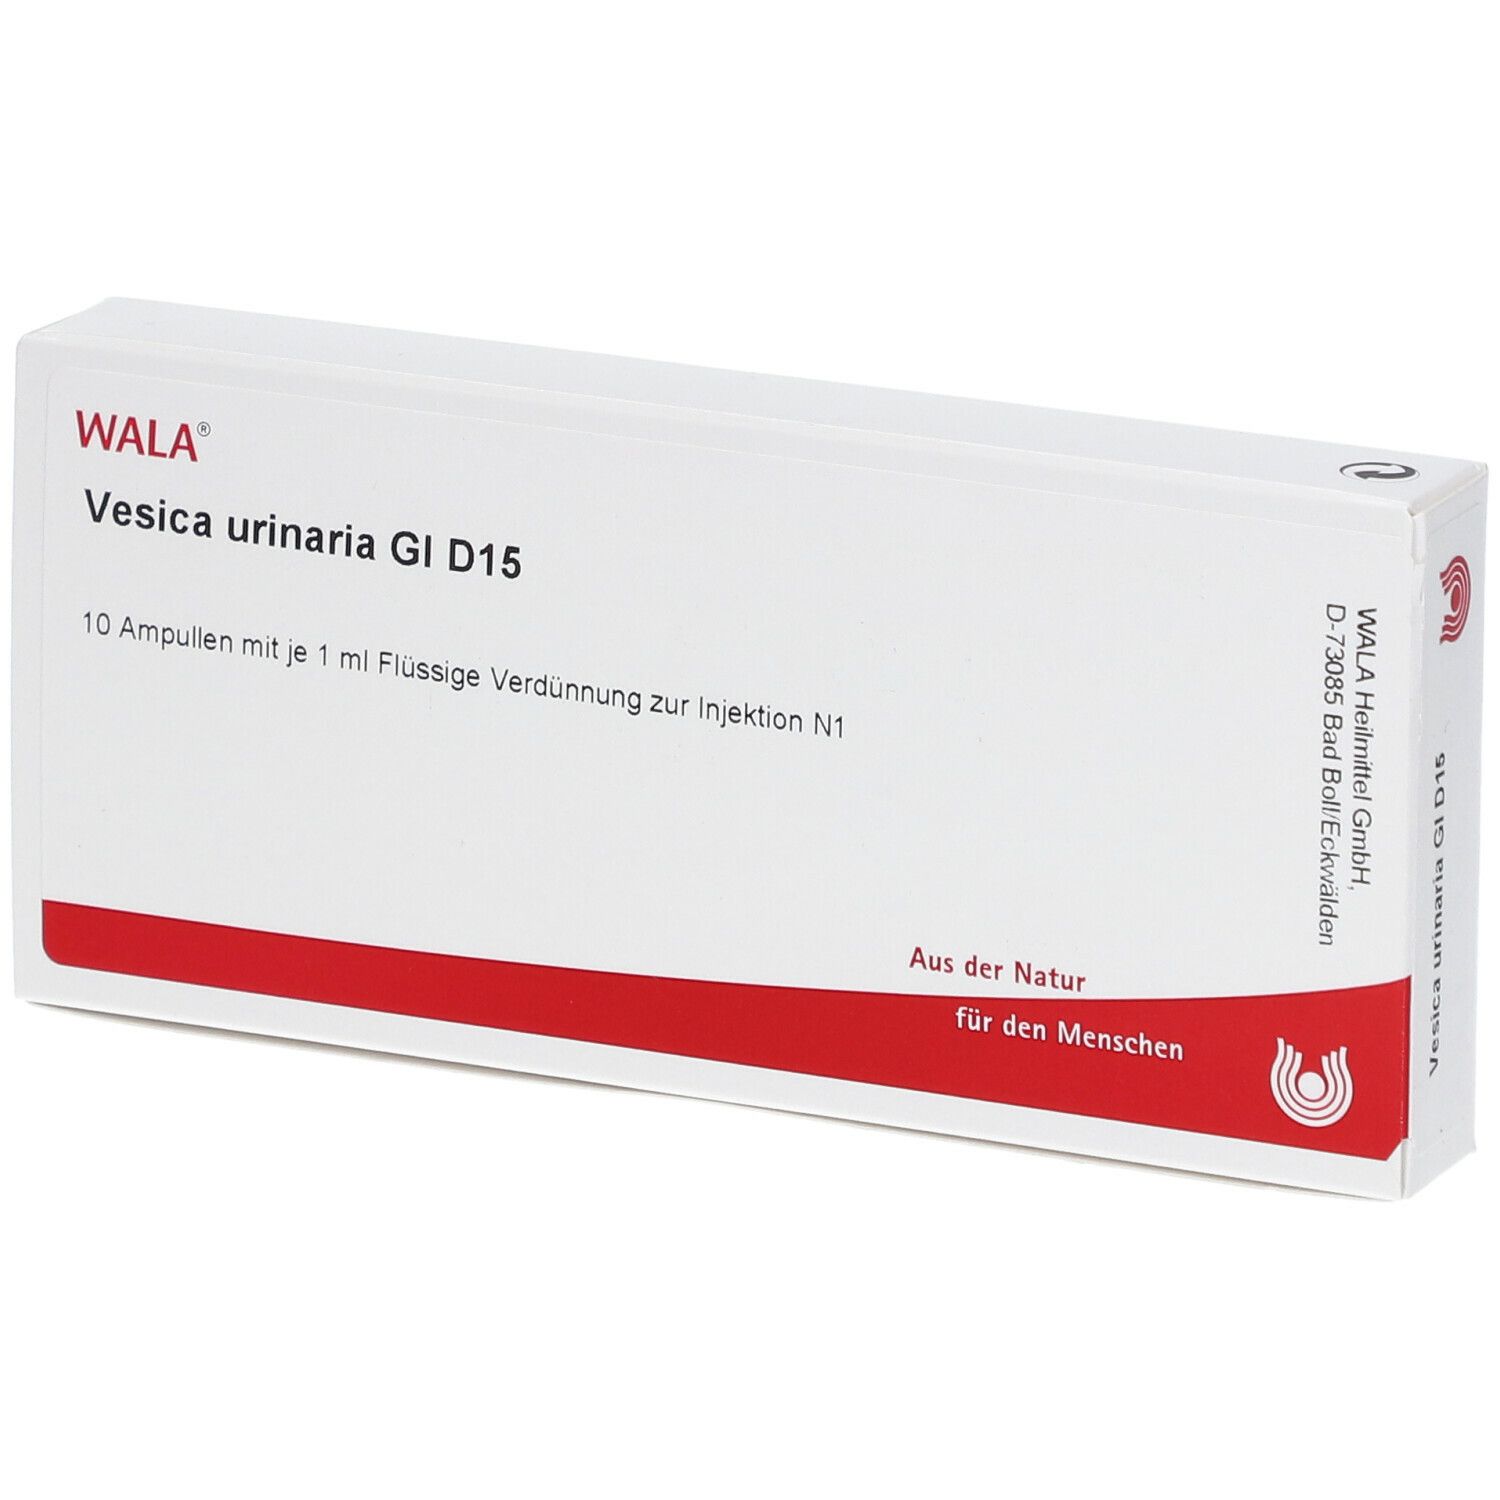 Wala® Vesica urinaria Gl D 15